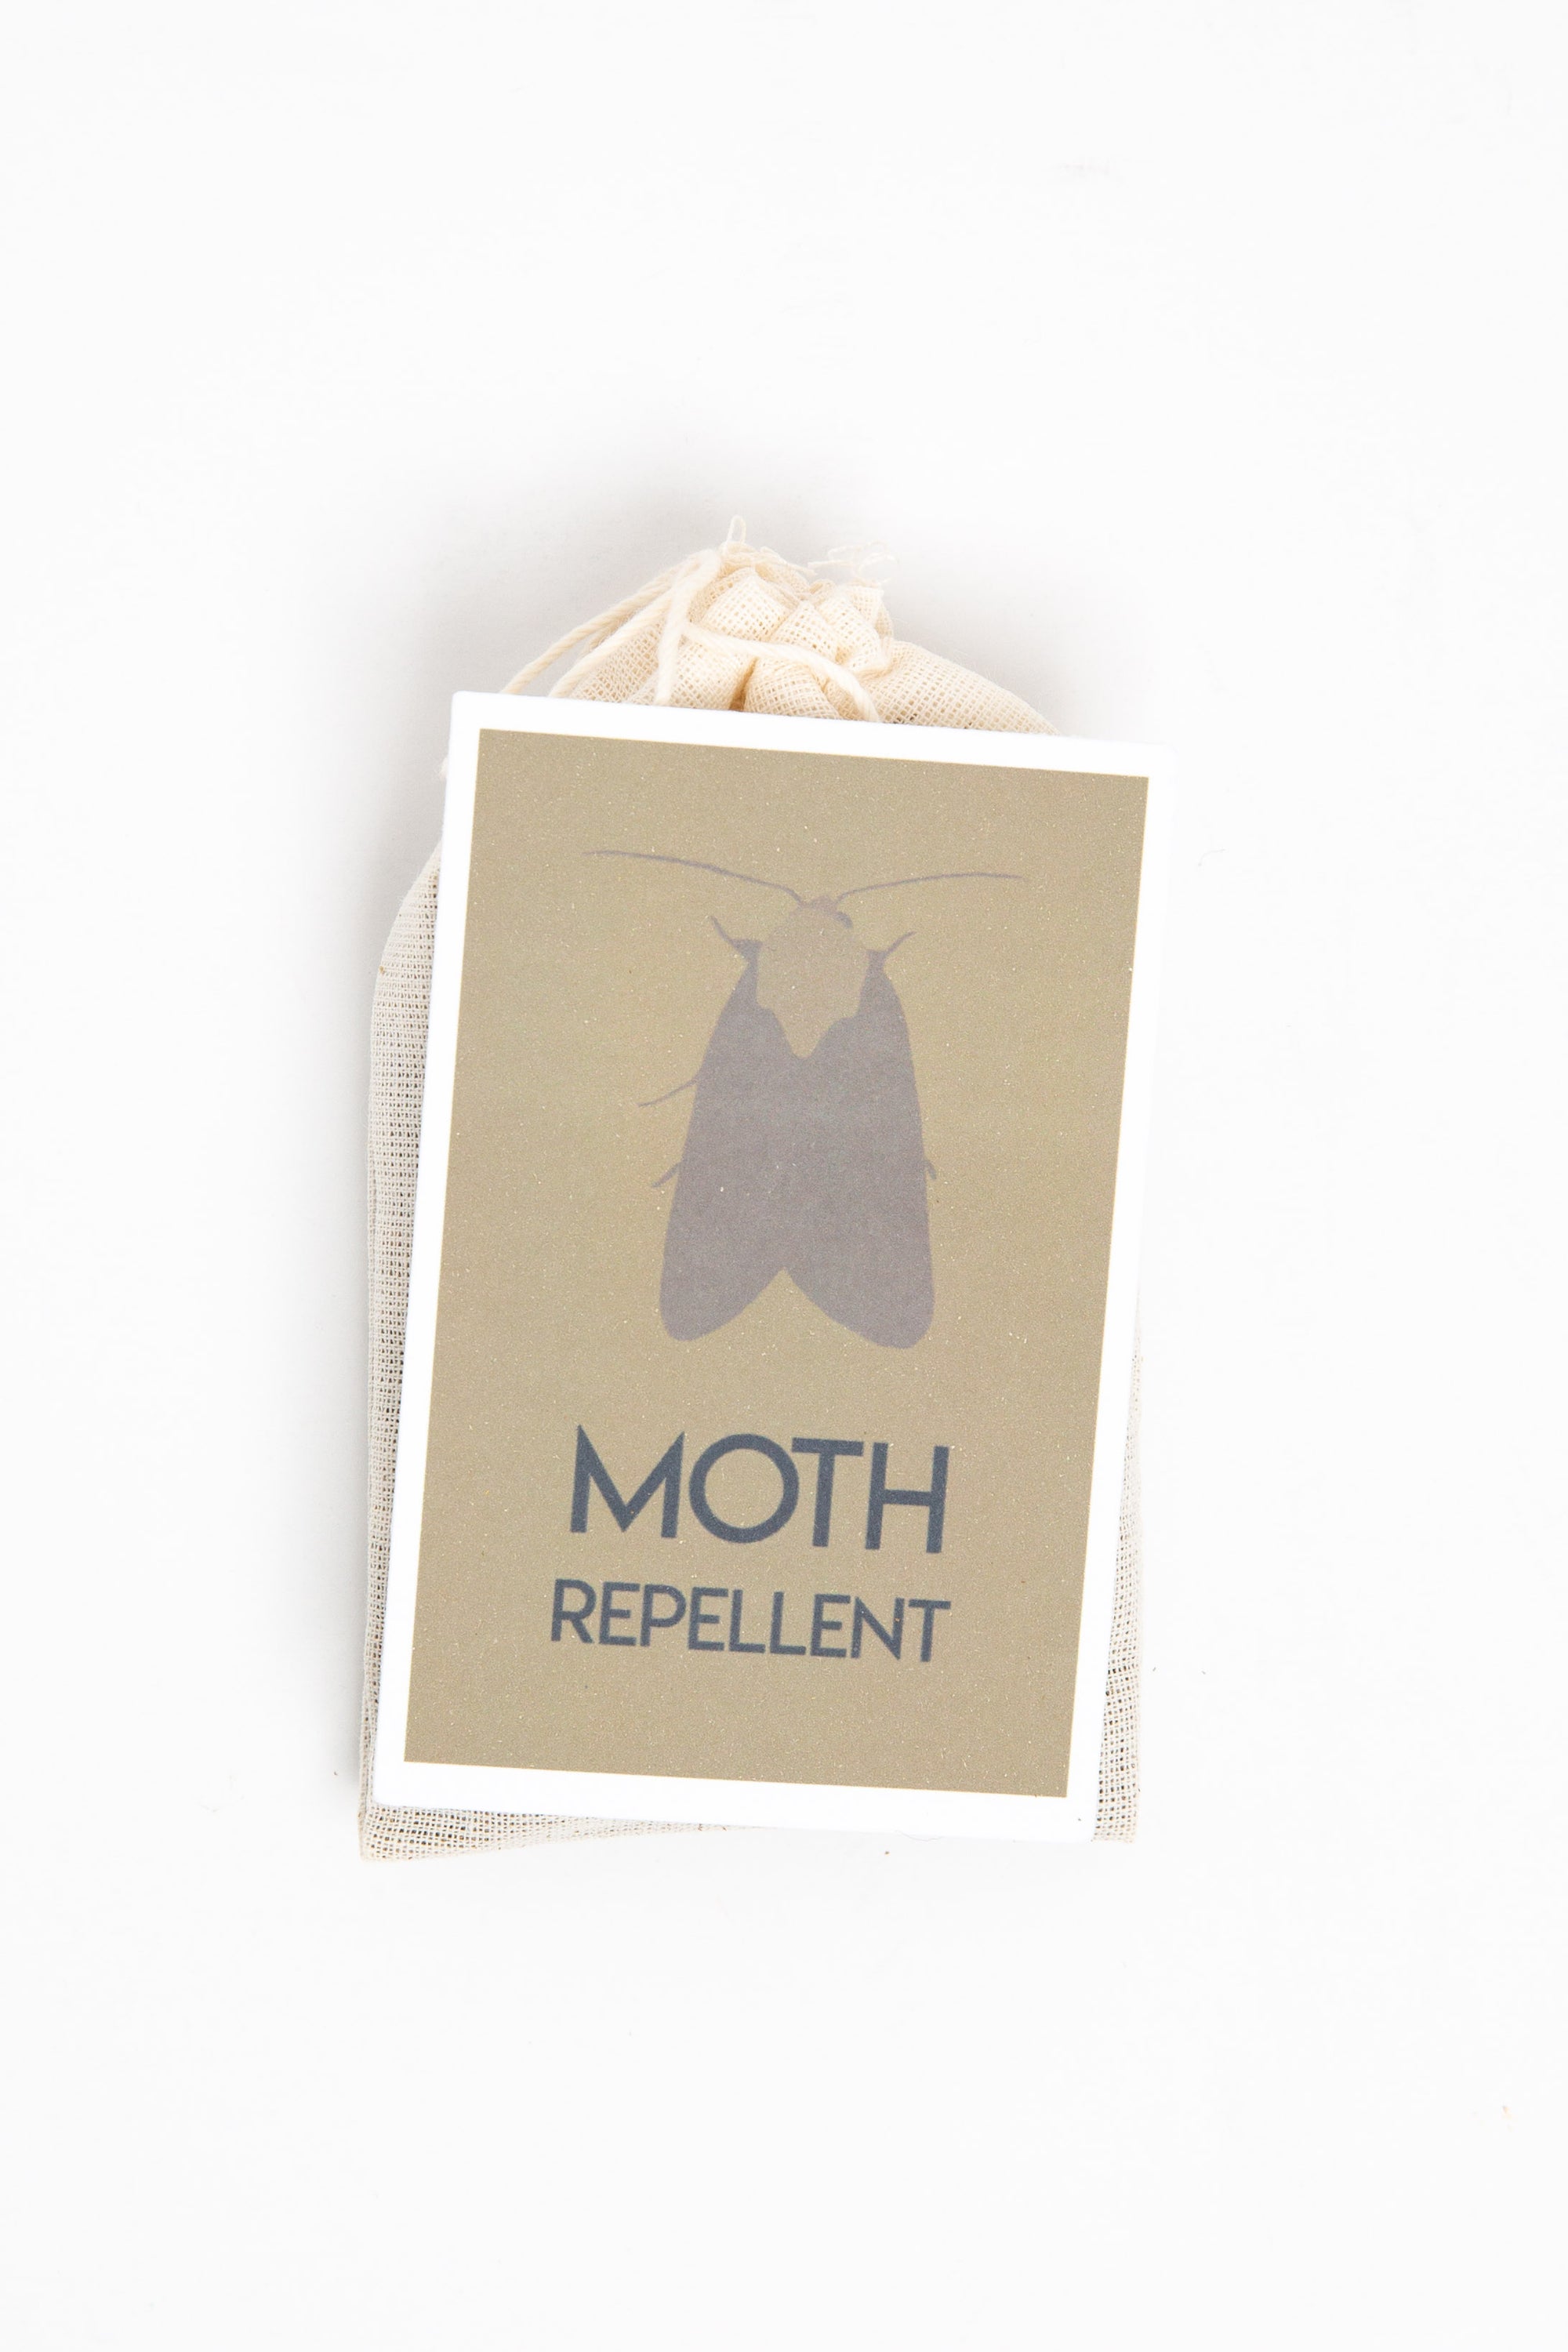 Moth Repellent Sachet